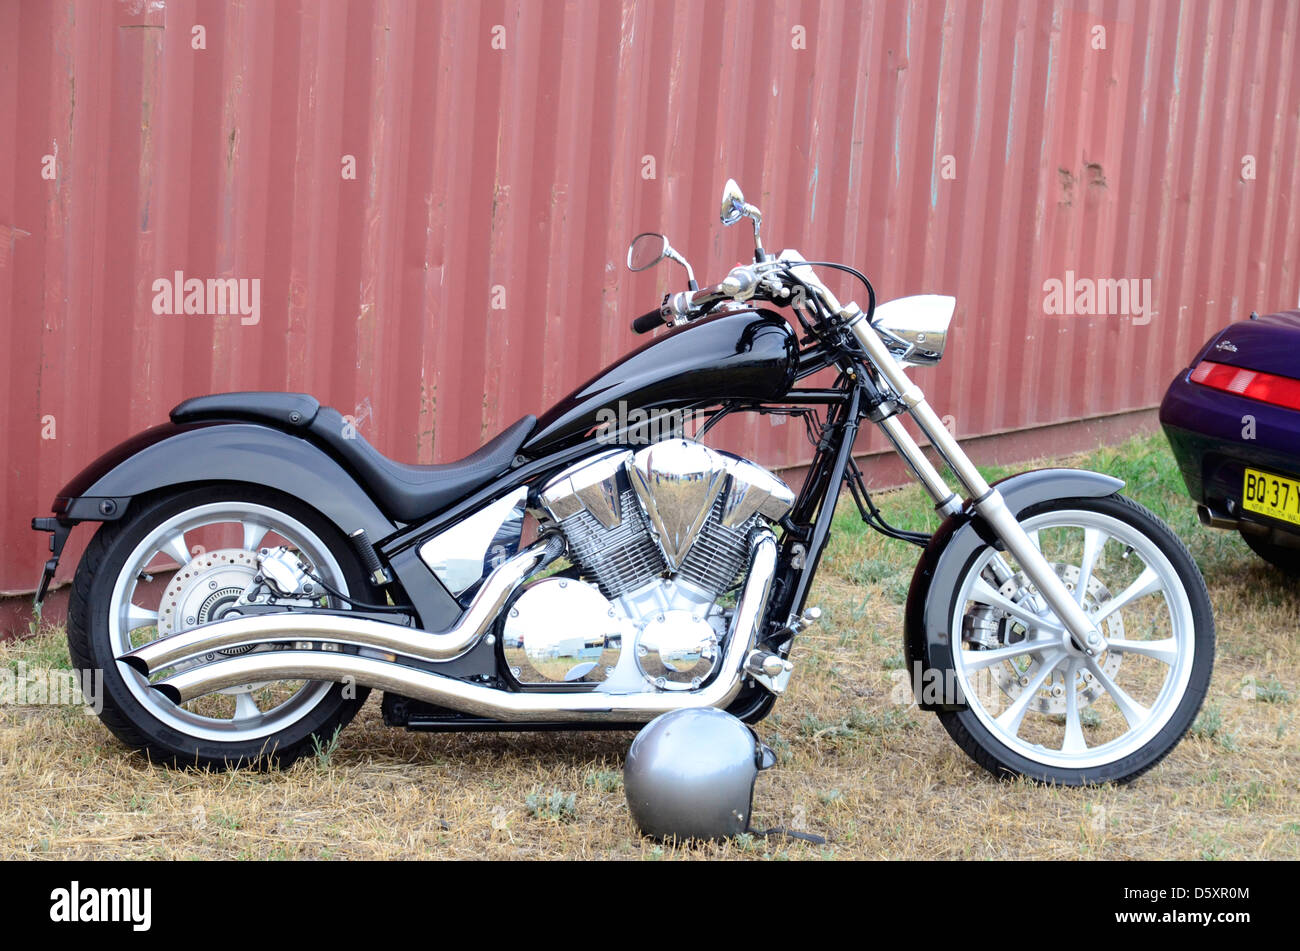 custom Honda motorcycle Stock Photo